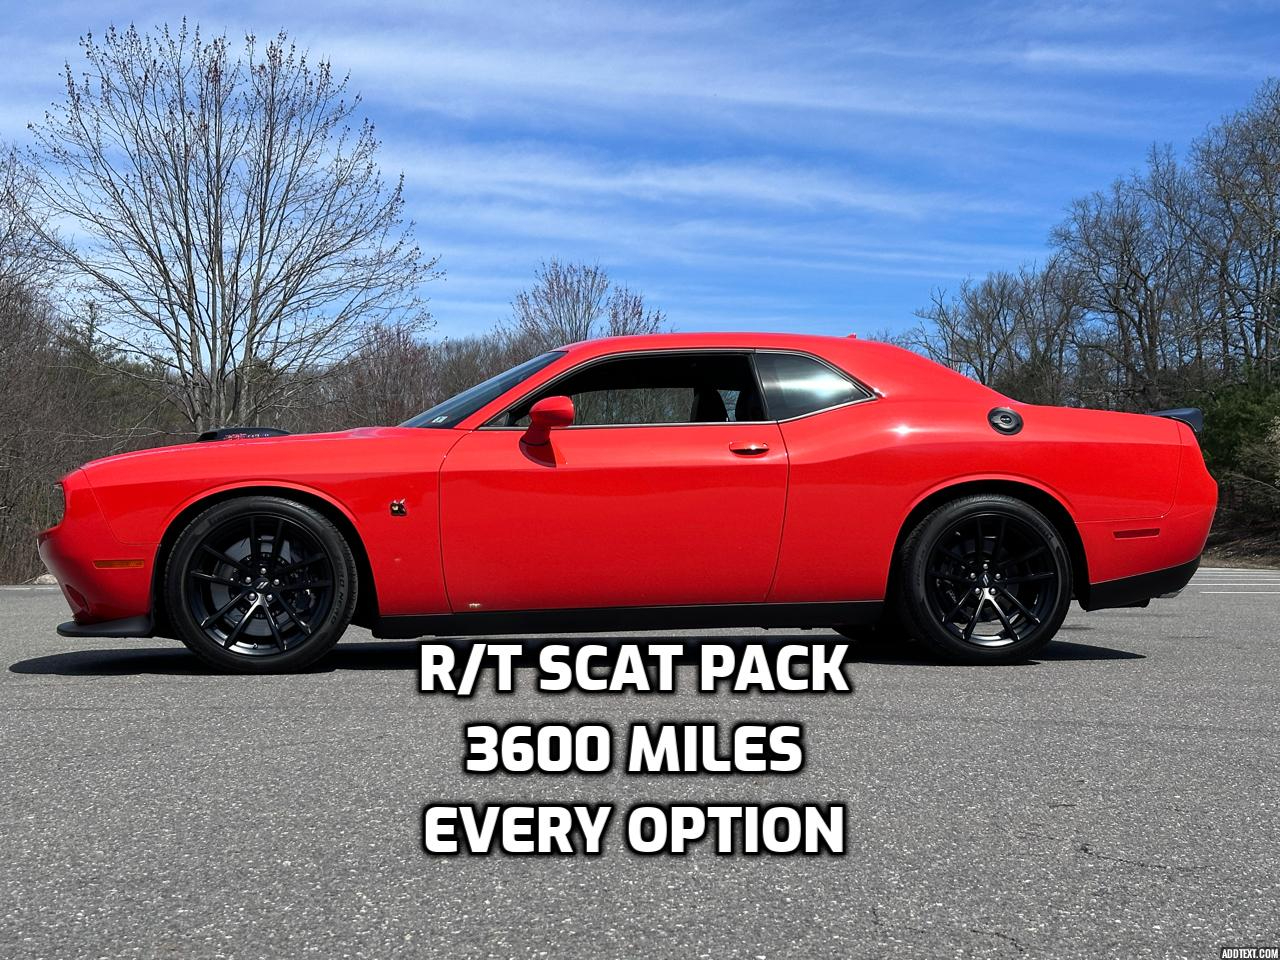 2021 Dodge Challenger R/T Scat Pack RWD